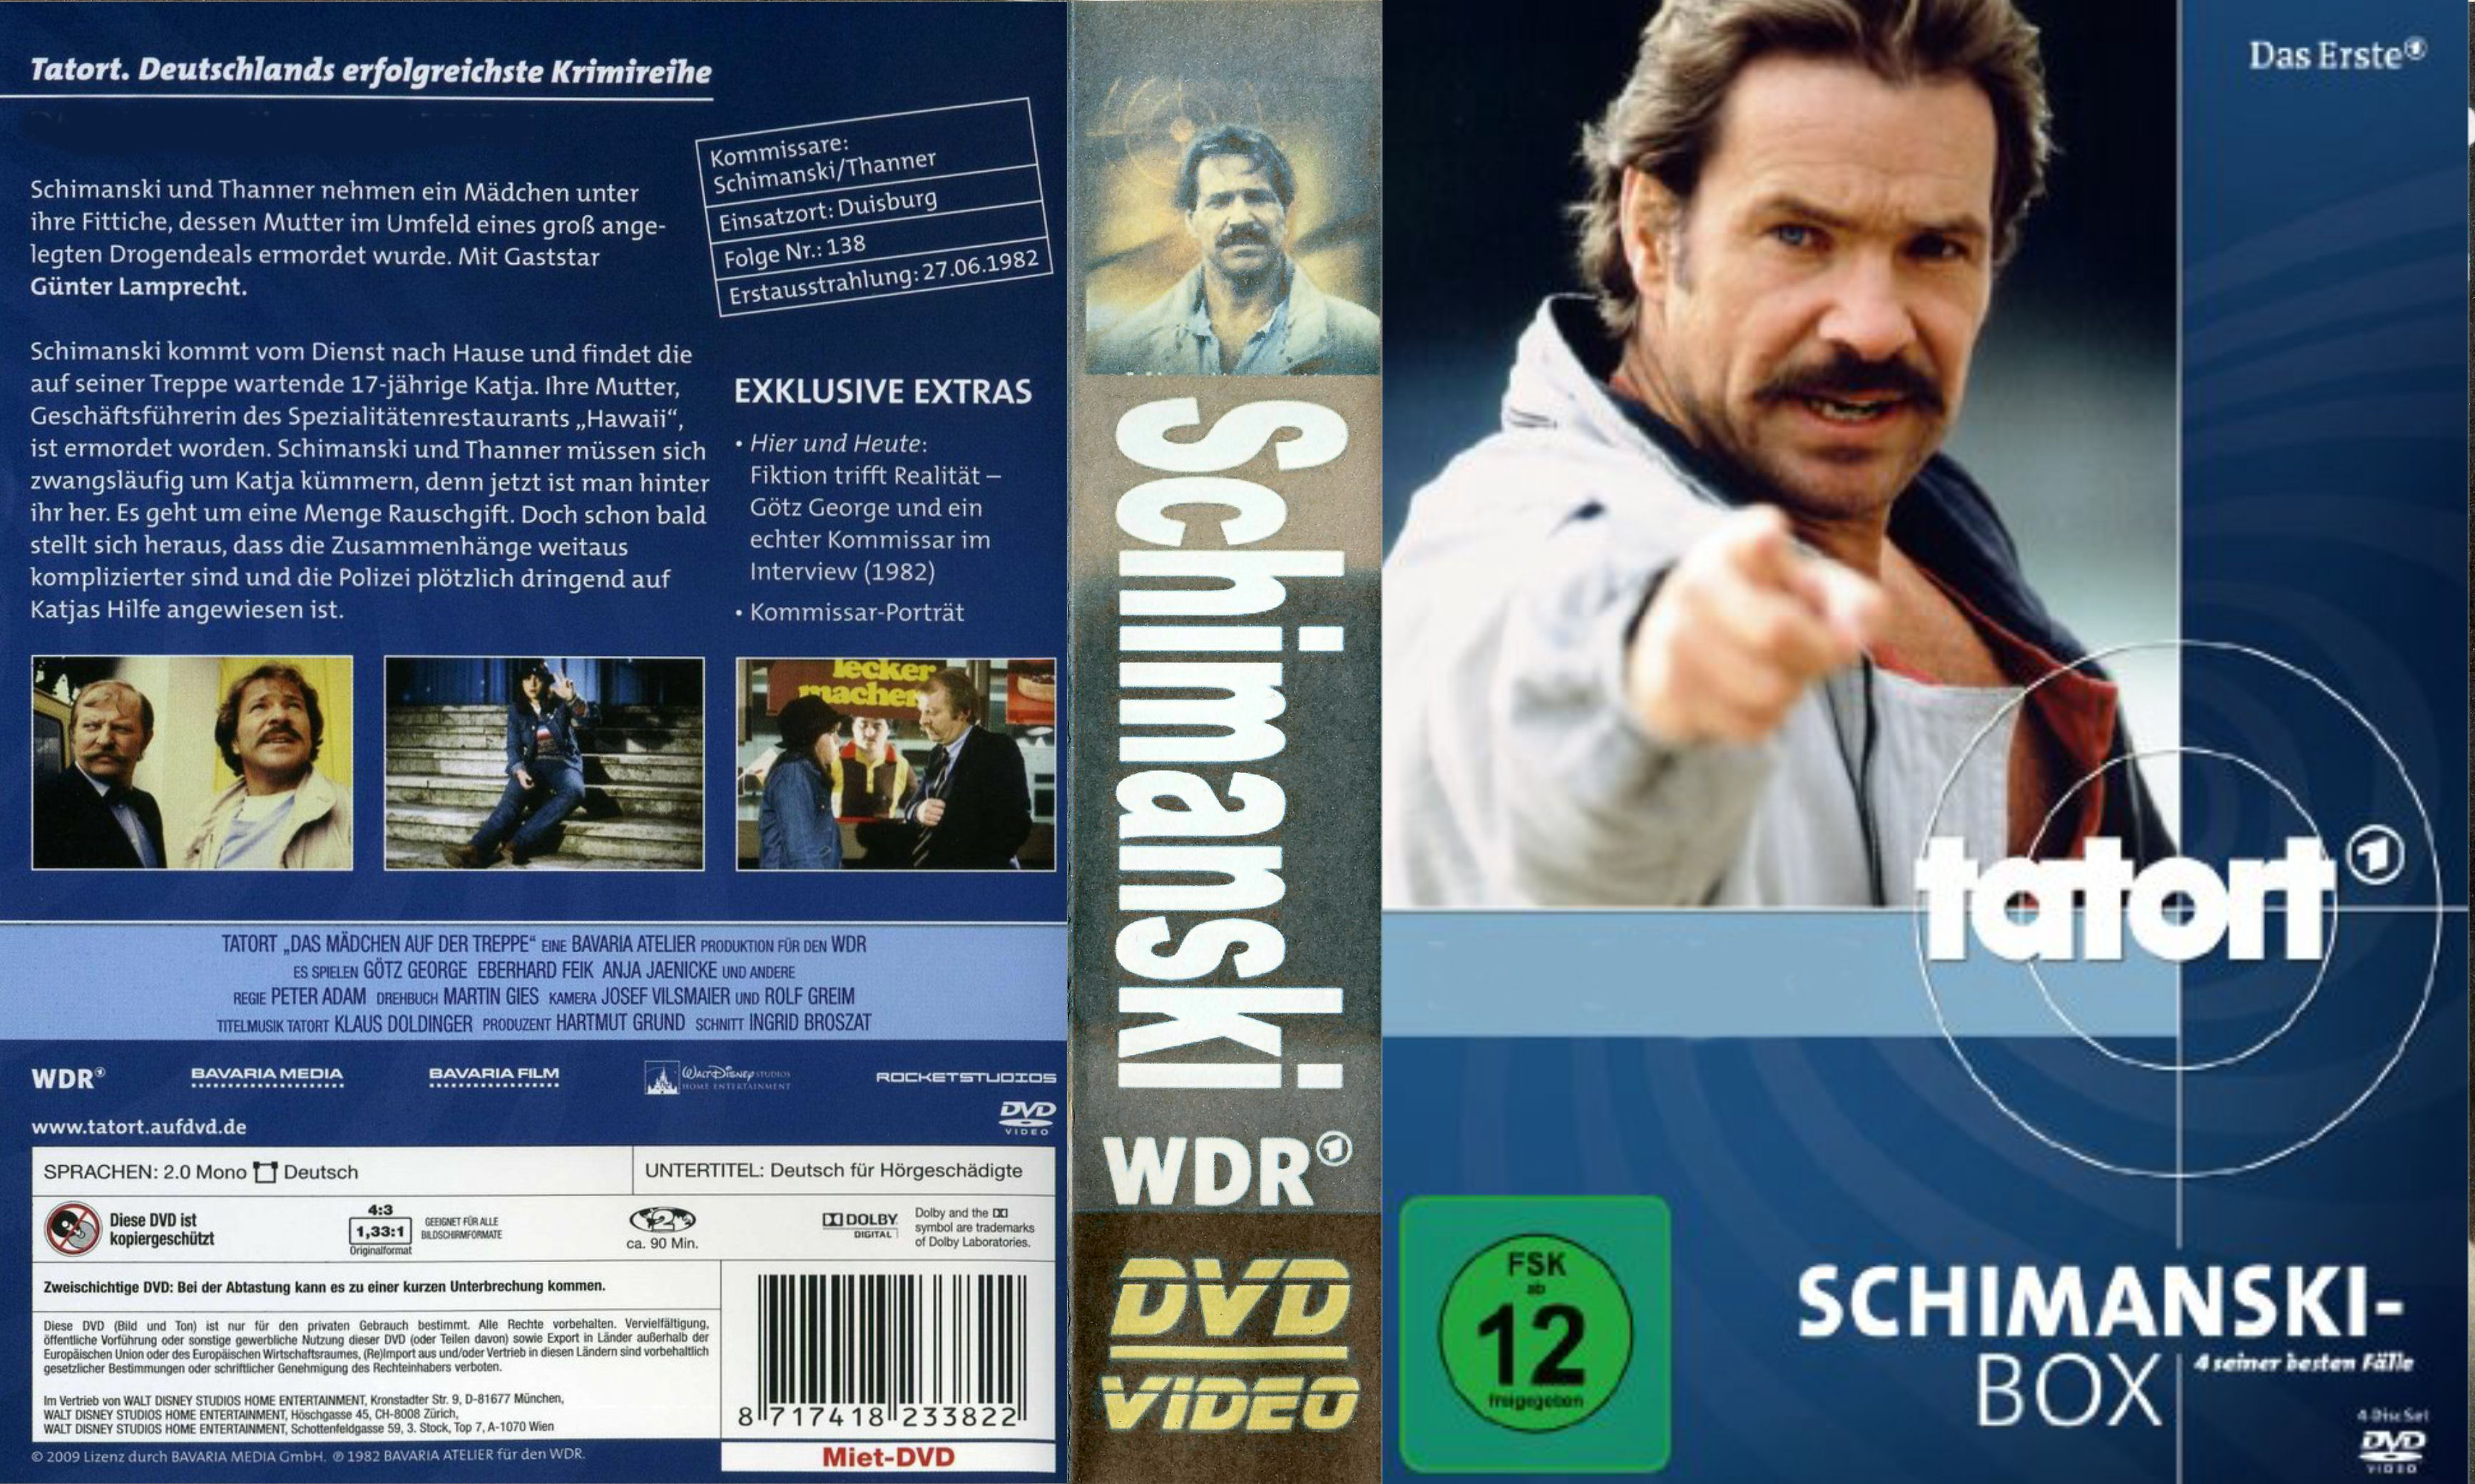 Schimanski Collectie Tatort No Subs - DvD 2